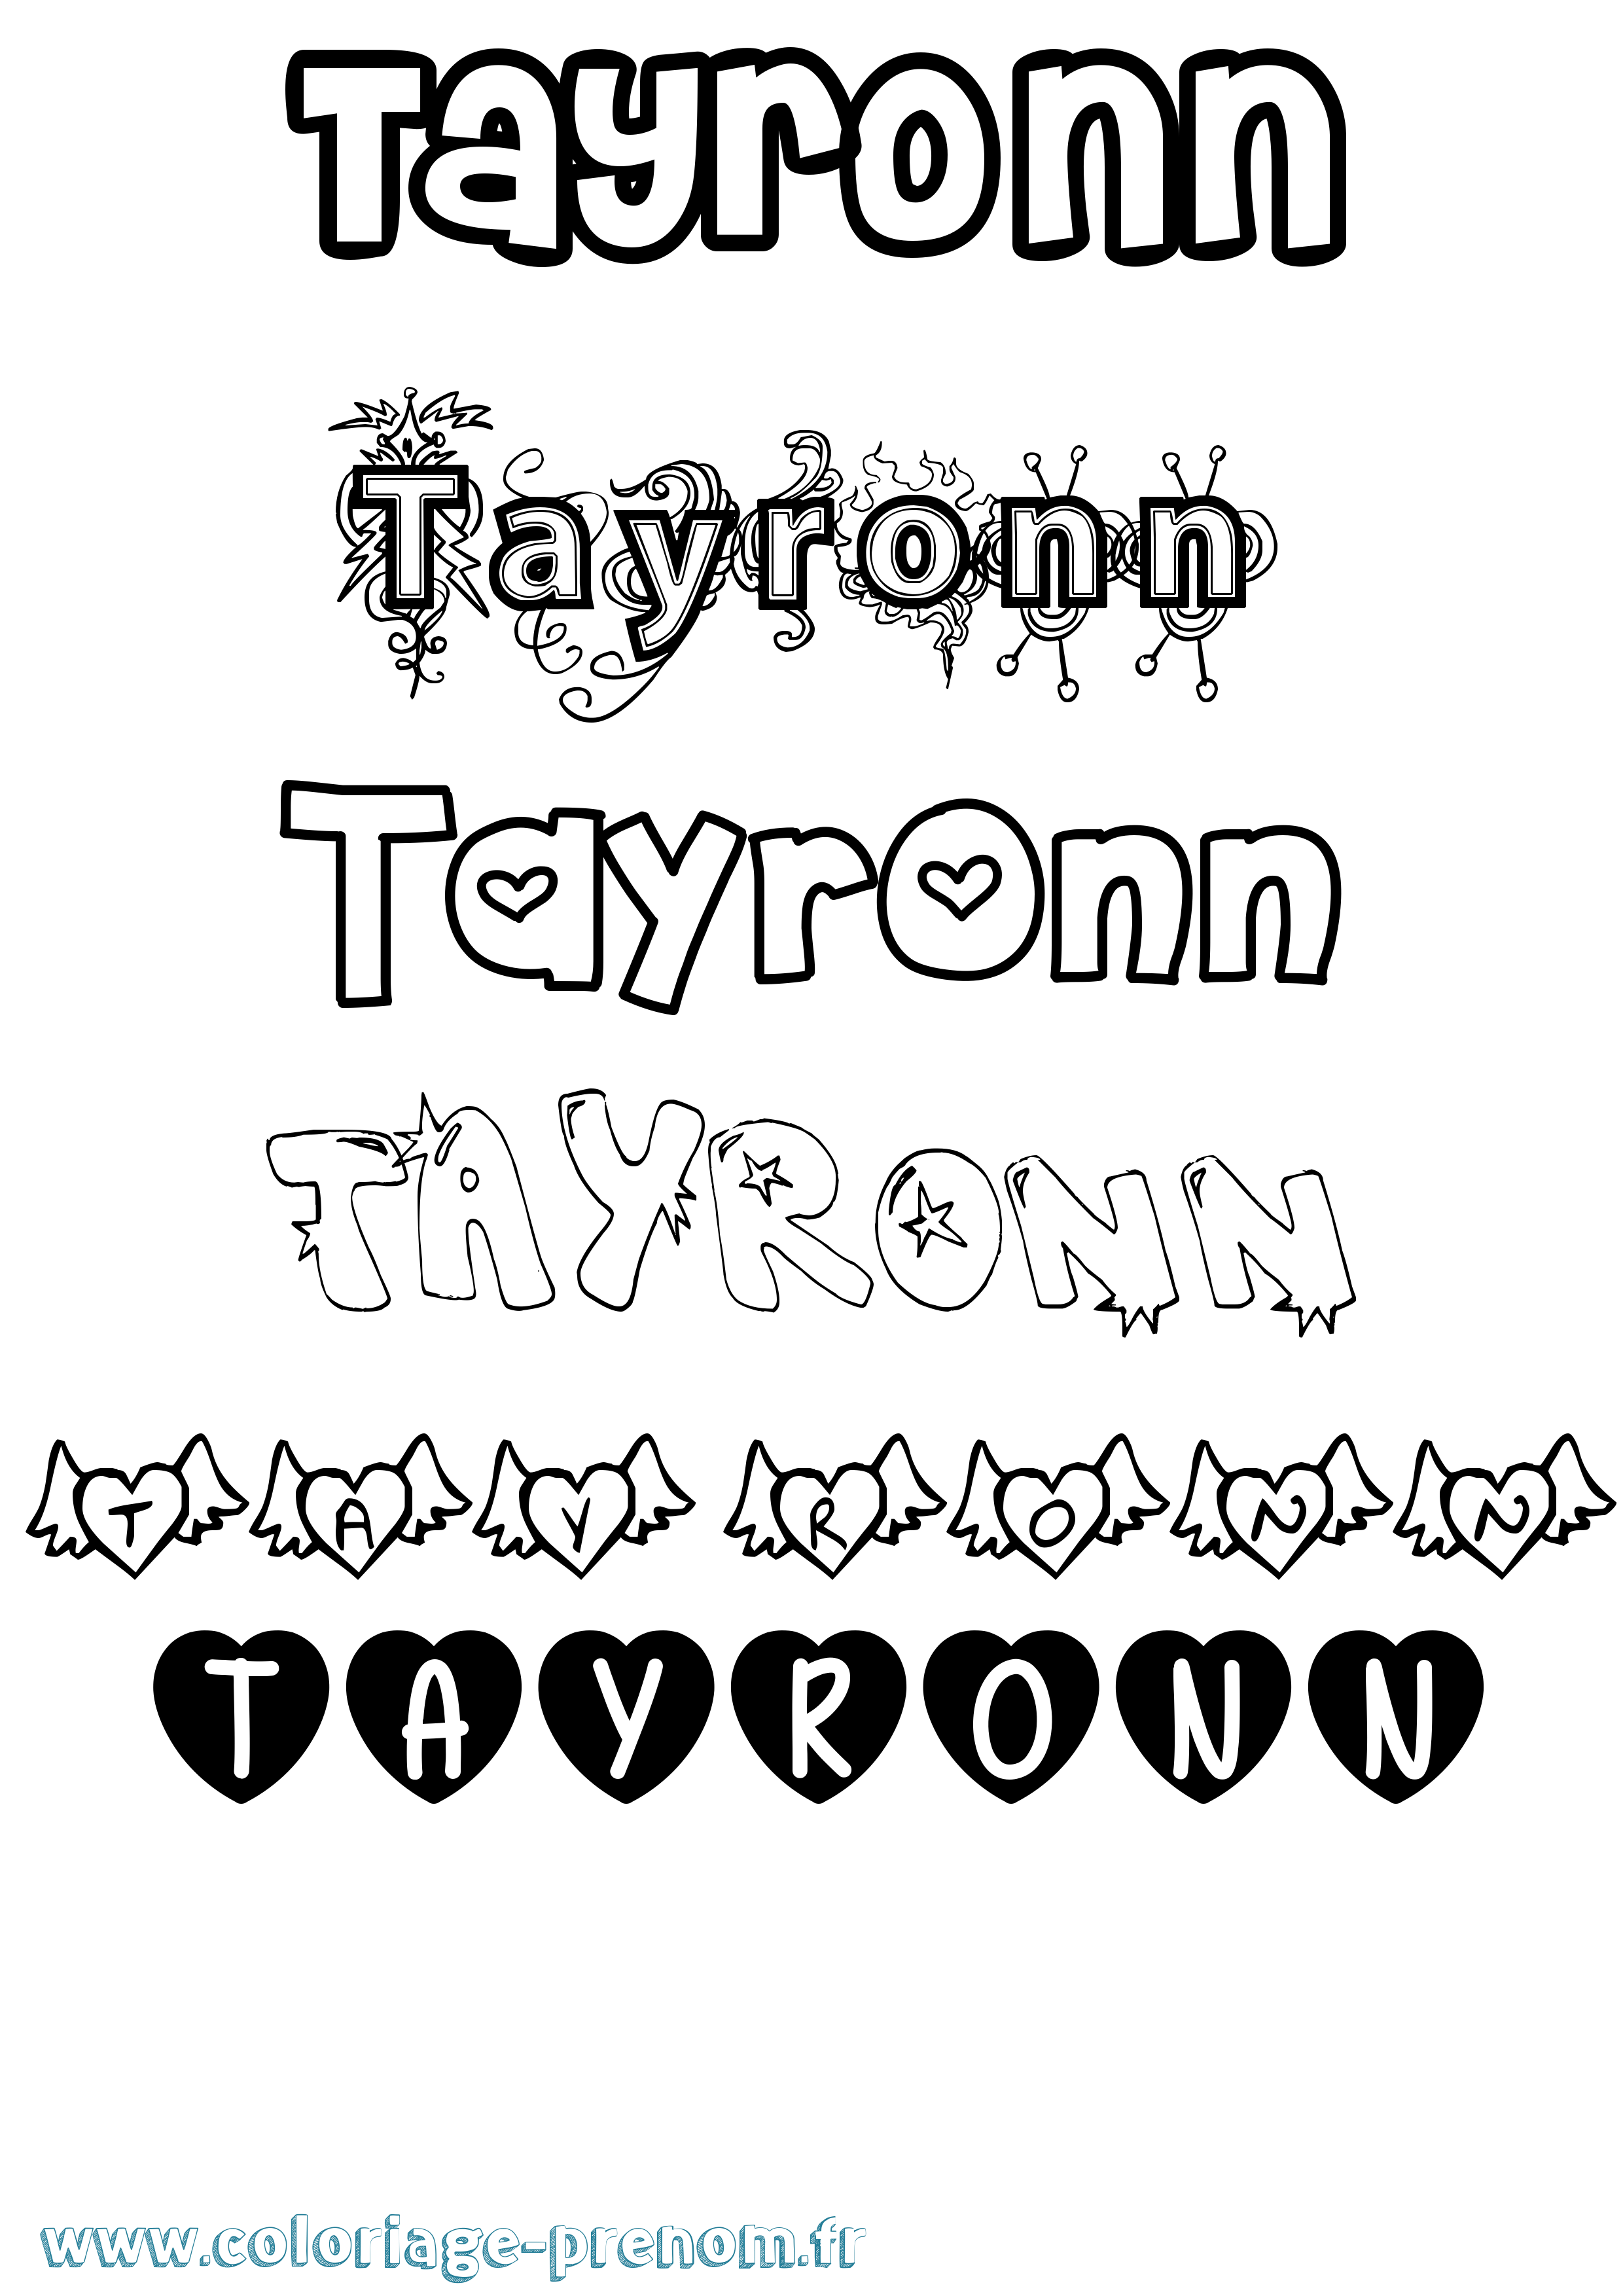 Coloriage prénom Tayronn Girly